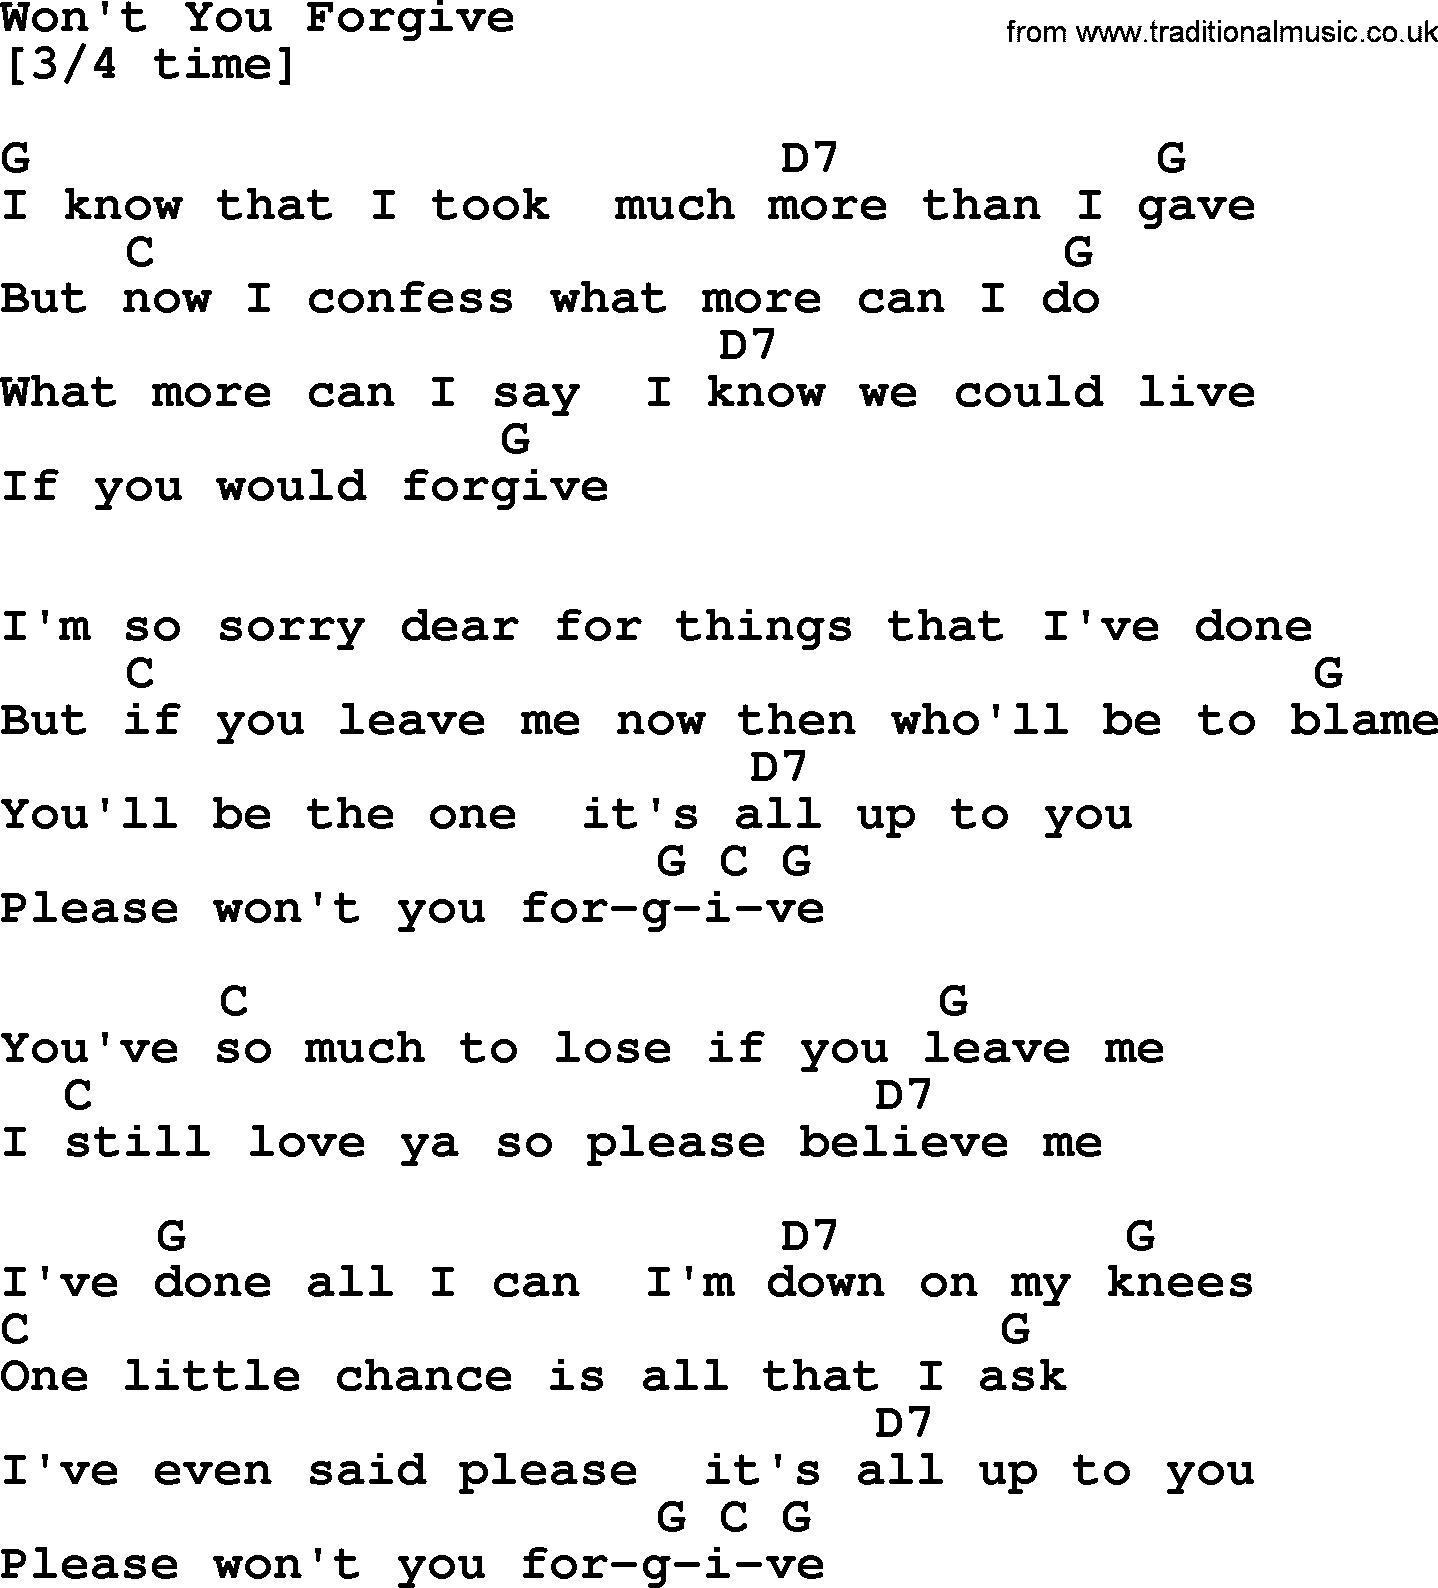 Marty Robbins song: Won't You Forgive, lyrics and chords